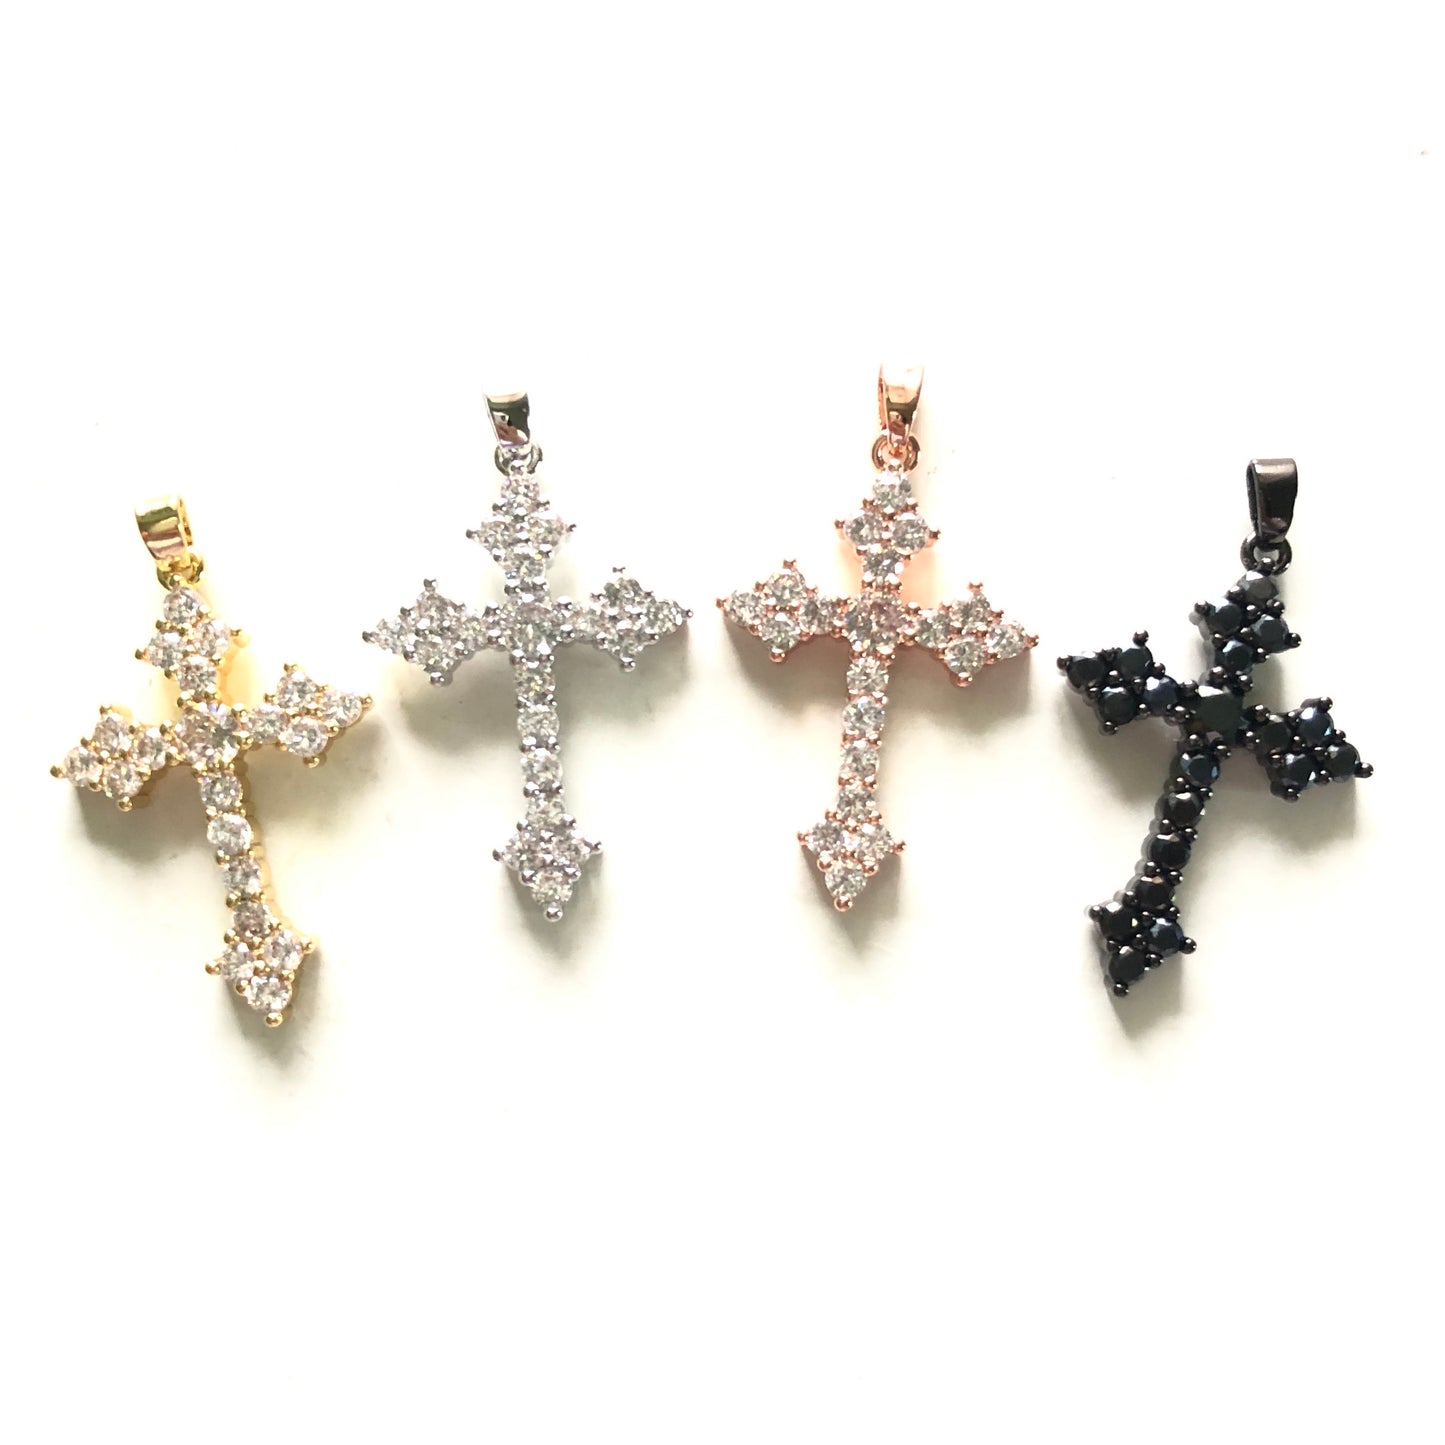 10pcs/lot 35*21mm CZ Paved Cross Charms CZ Paved Charms Crosses Charms Beads Beyond